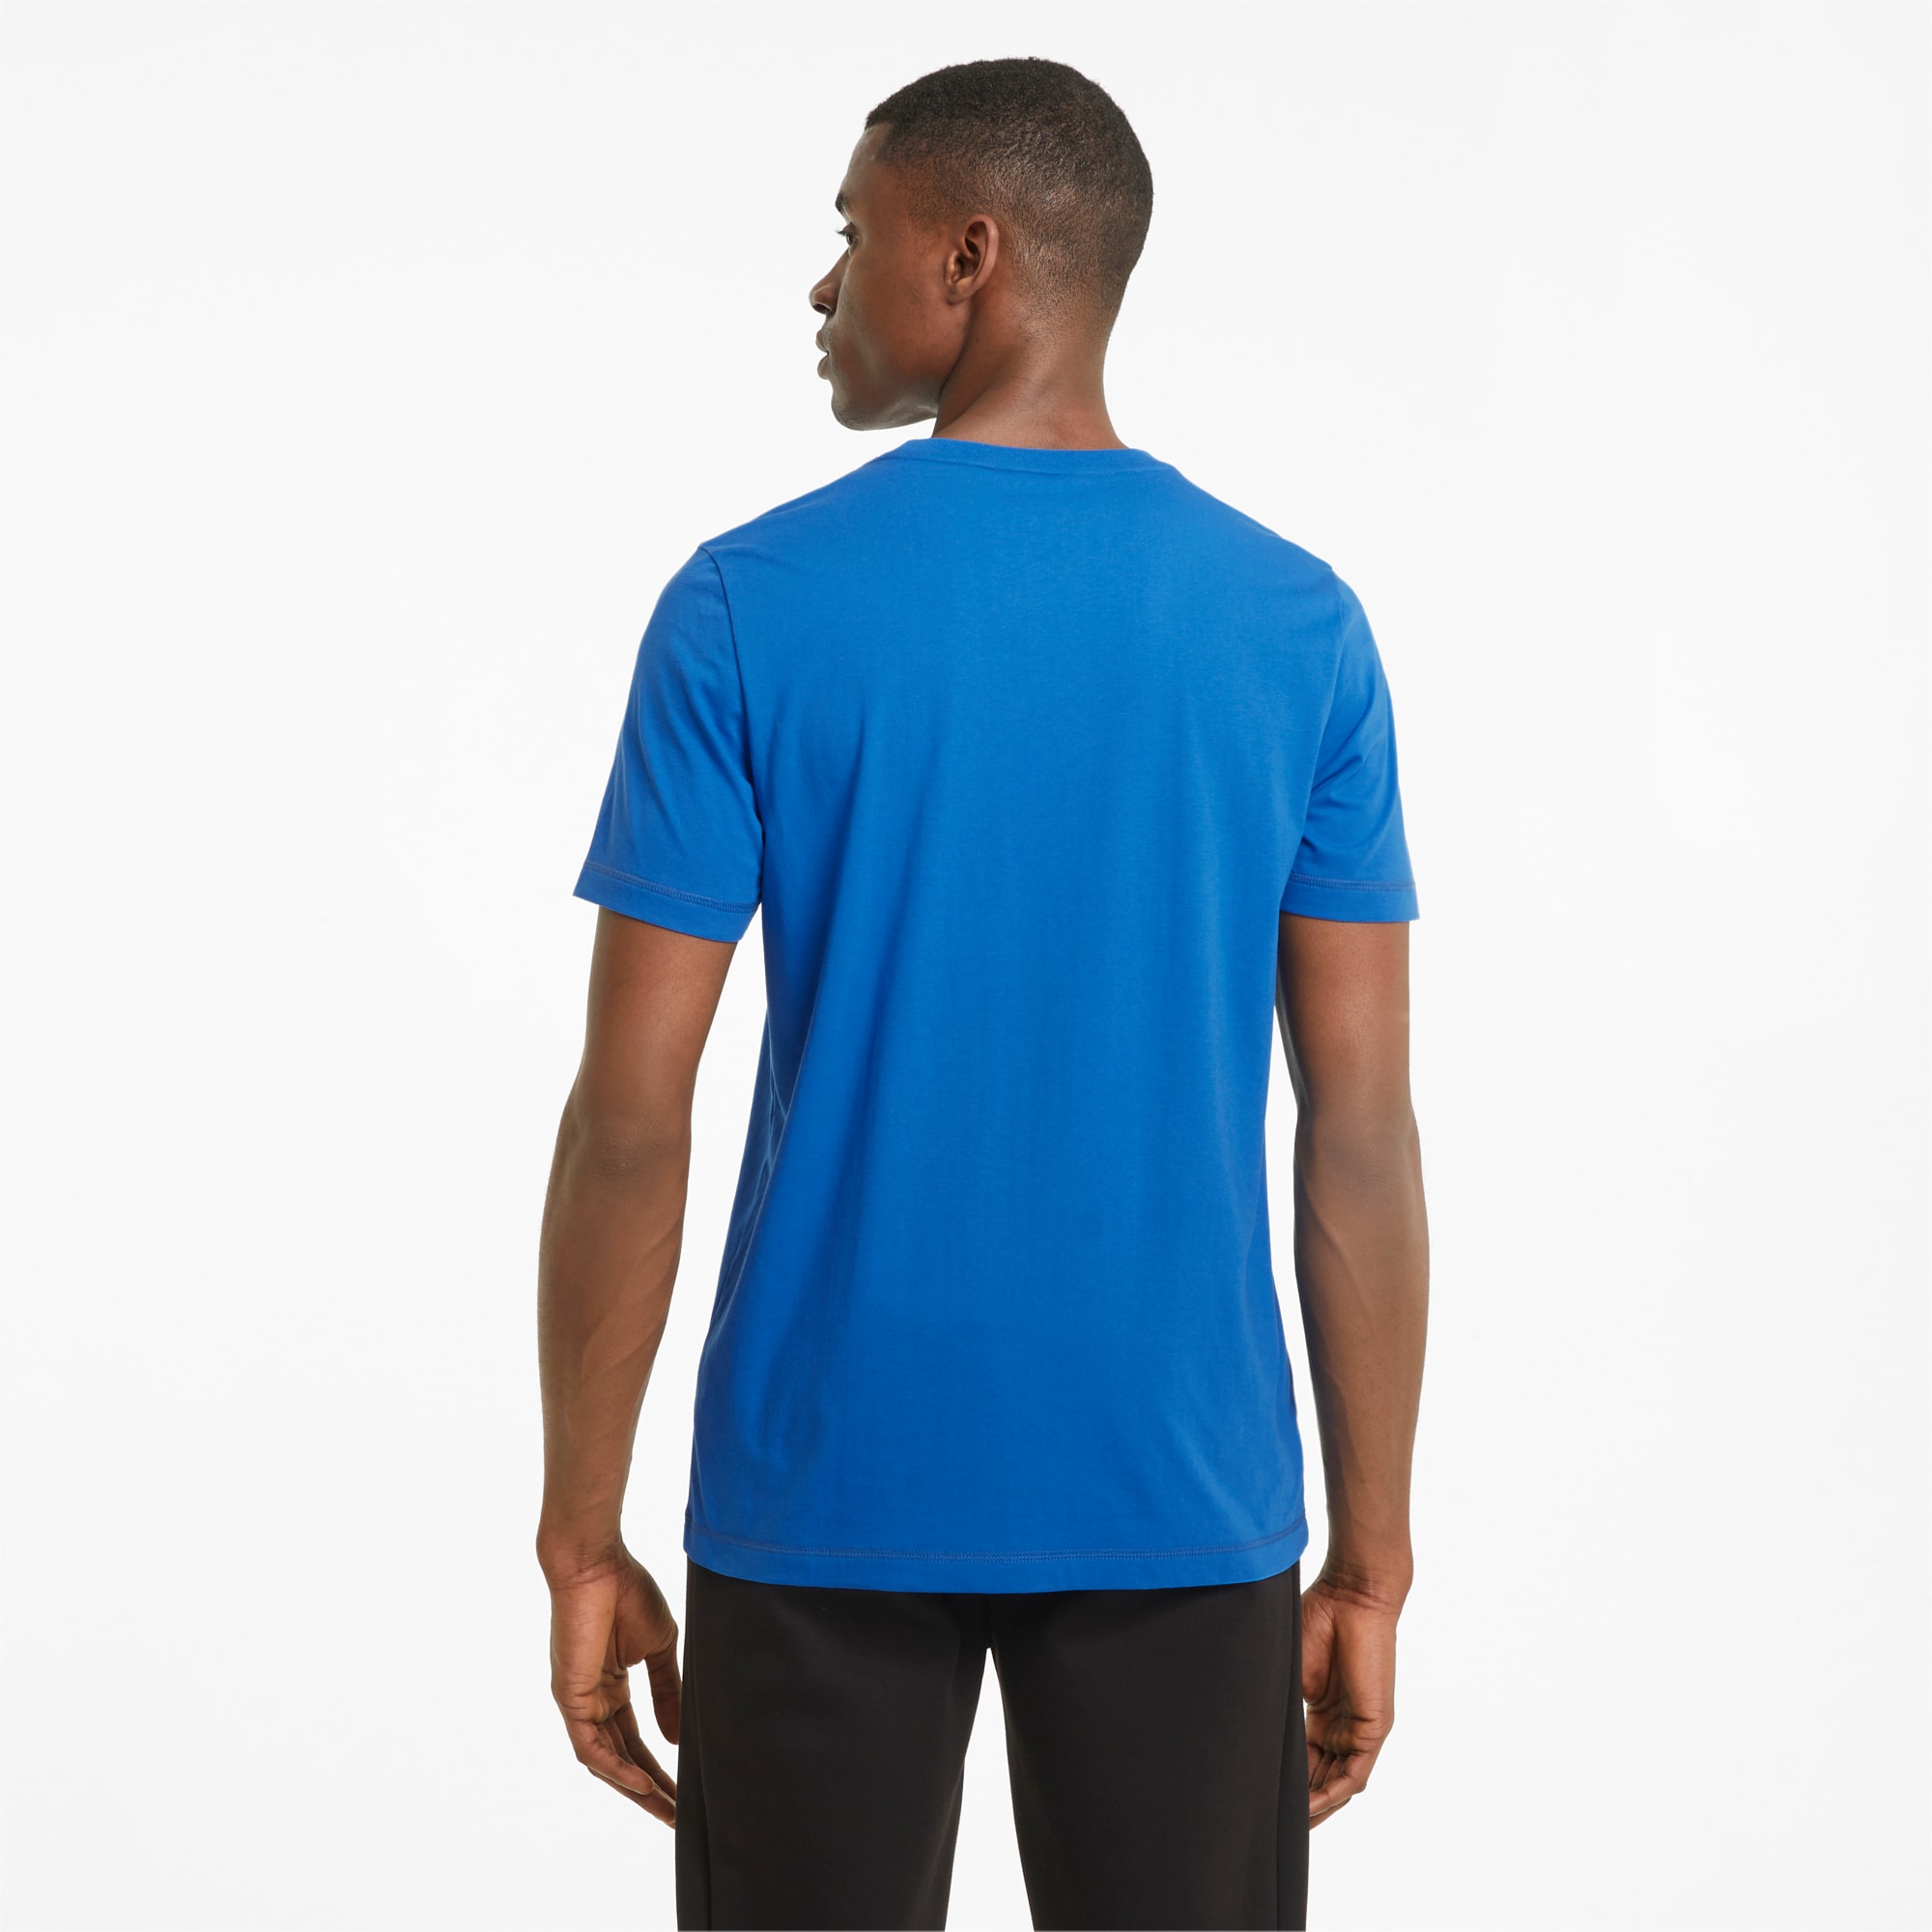 PUMA Active Soft Men's T-Shirt, Royal Blue, Size S, Clothing